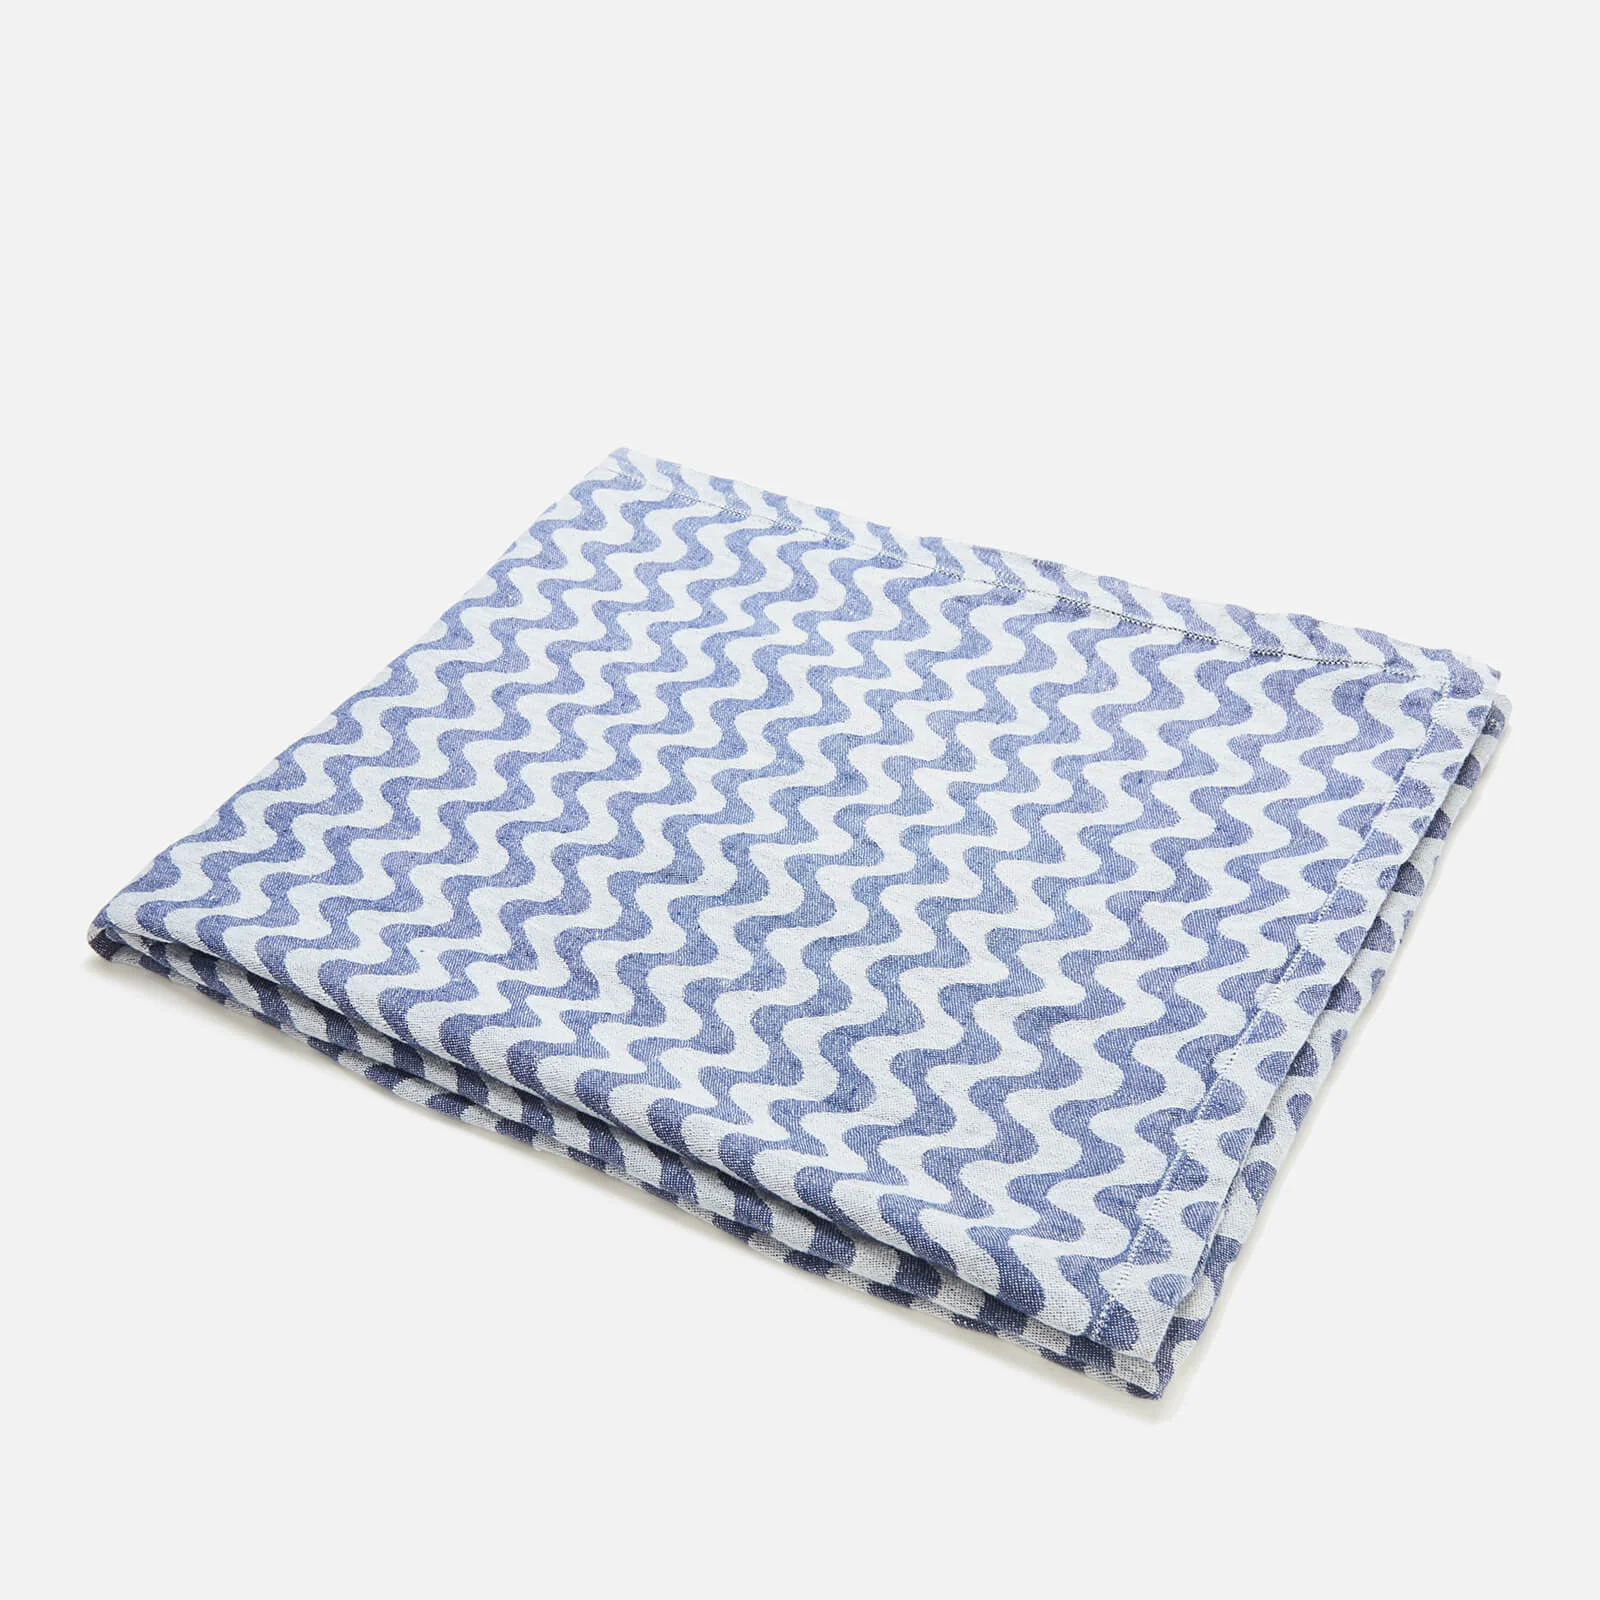 Frescobol Carioca Men's Jacquard Linen Towel - Navy Blue Image 1